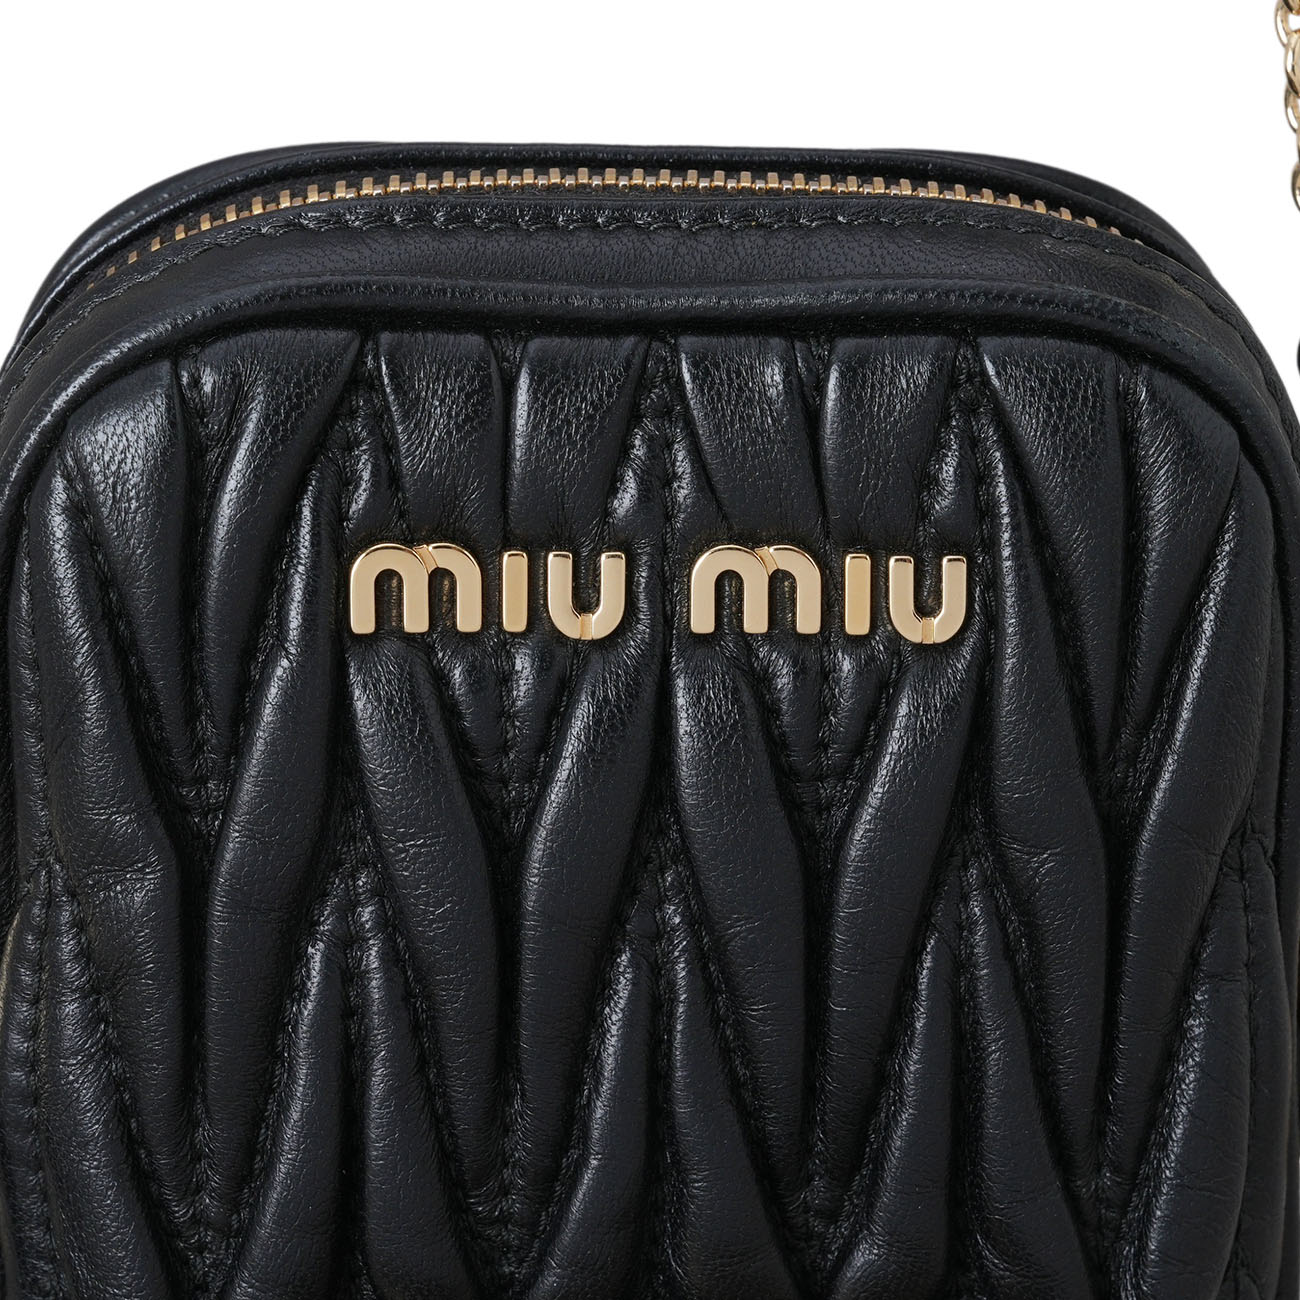 MIU MIU(USED)미우미우 5BP066 마틀라세 퀼팅 휴대폰 파우치백